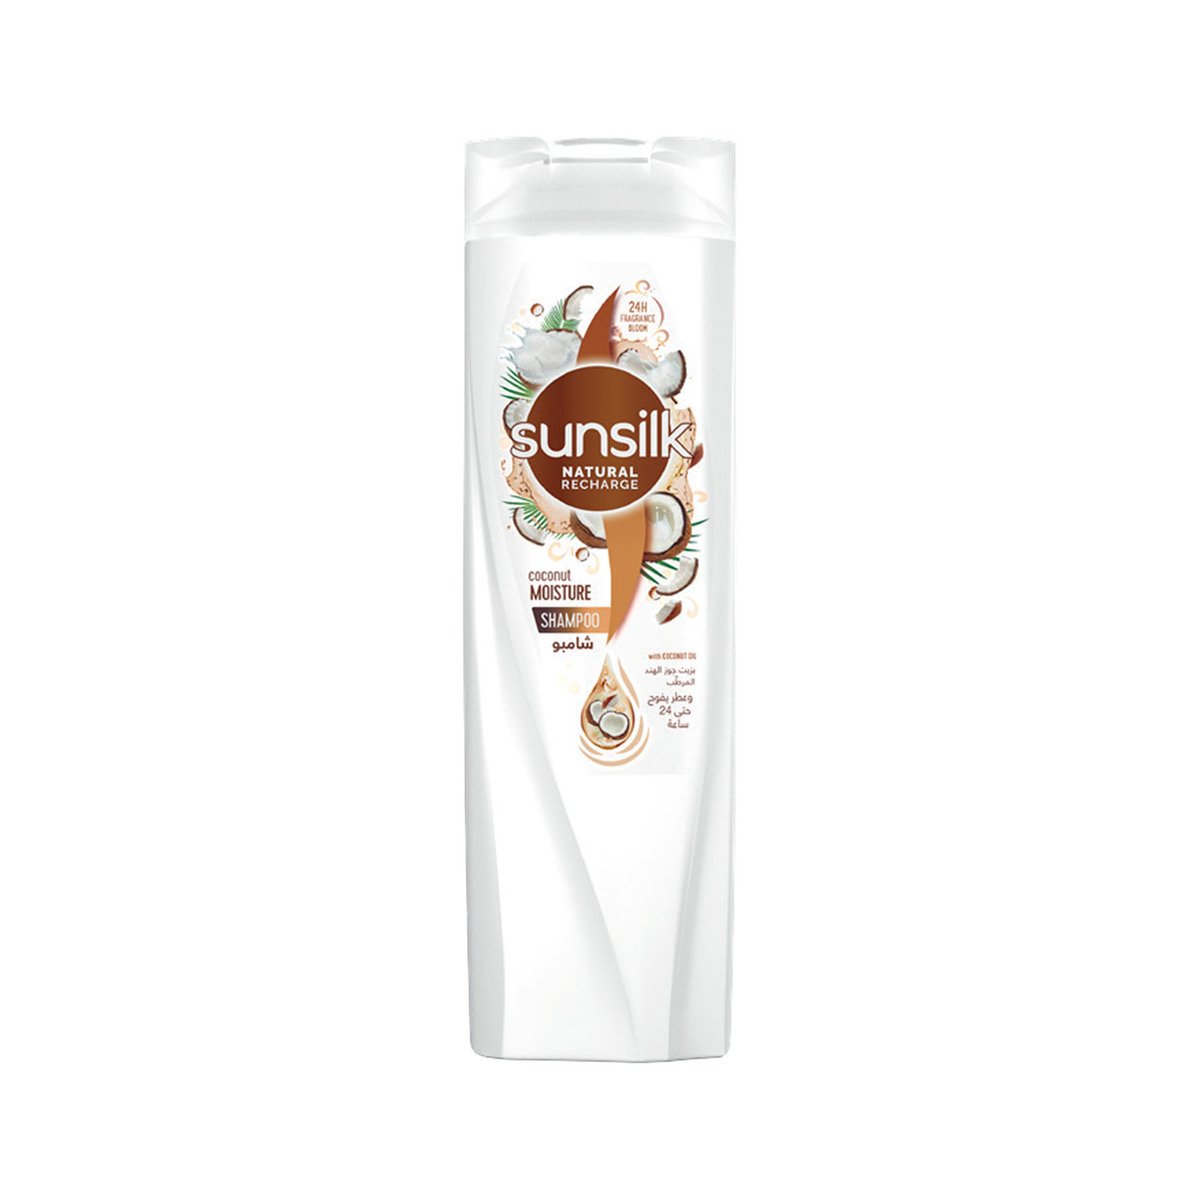 Sunsilk Natural Recharge Coconut Moisture Shampoo 400 ml + Oil Replacement 300 ml